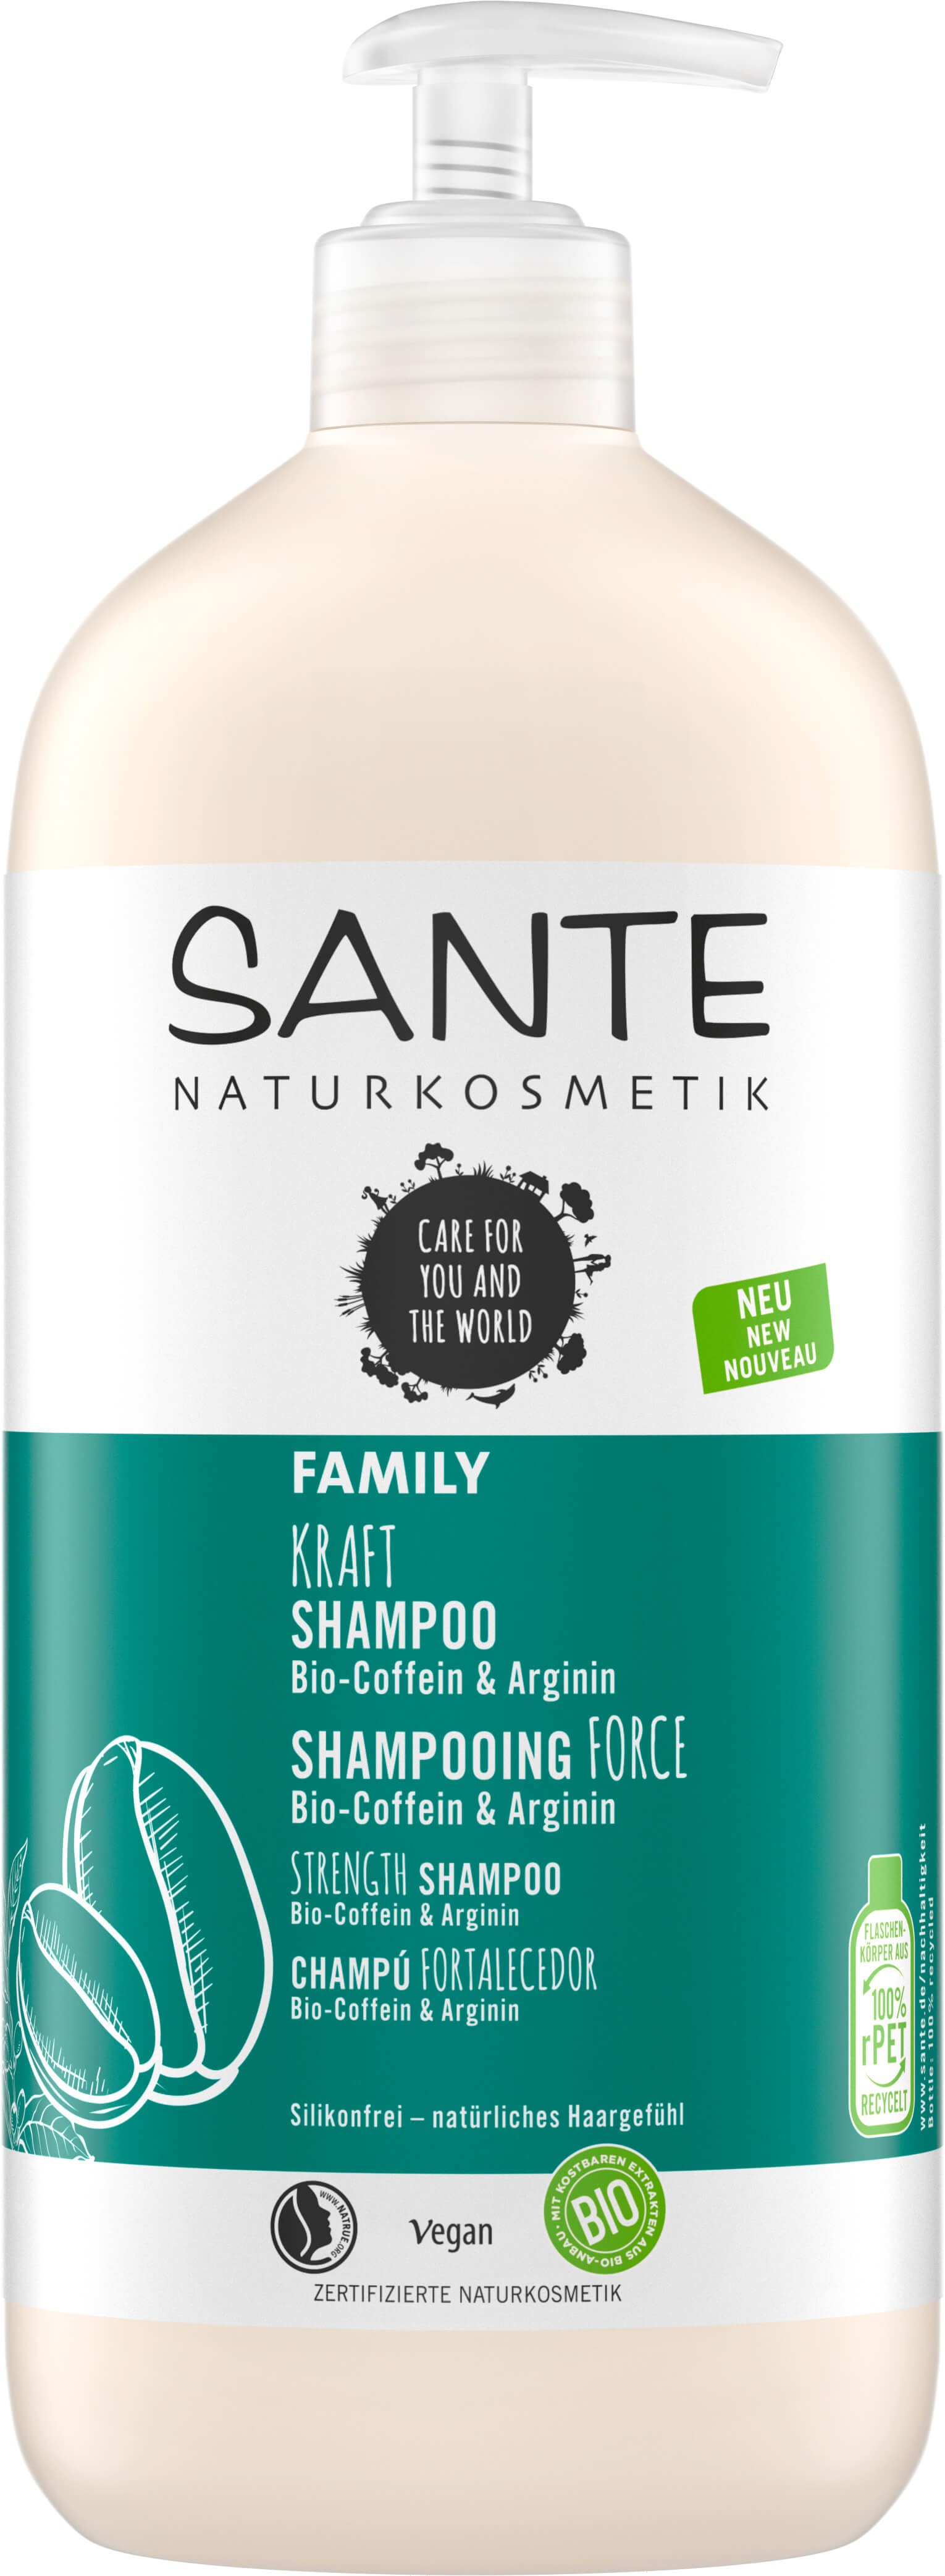 Bio-Coffein Shampoo Arginin SANTE | Naturkosmetik & Kraft